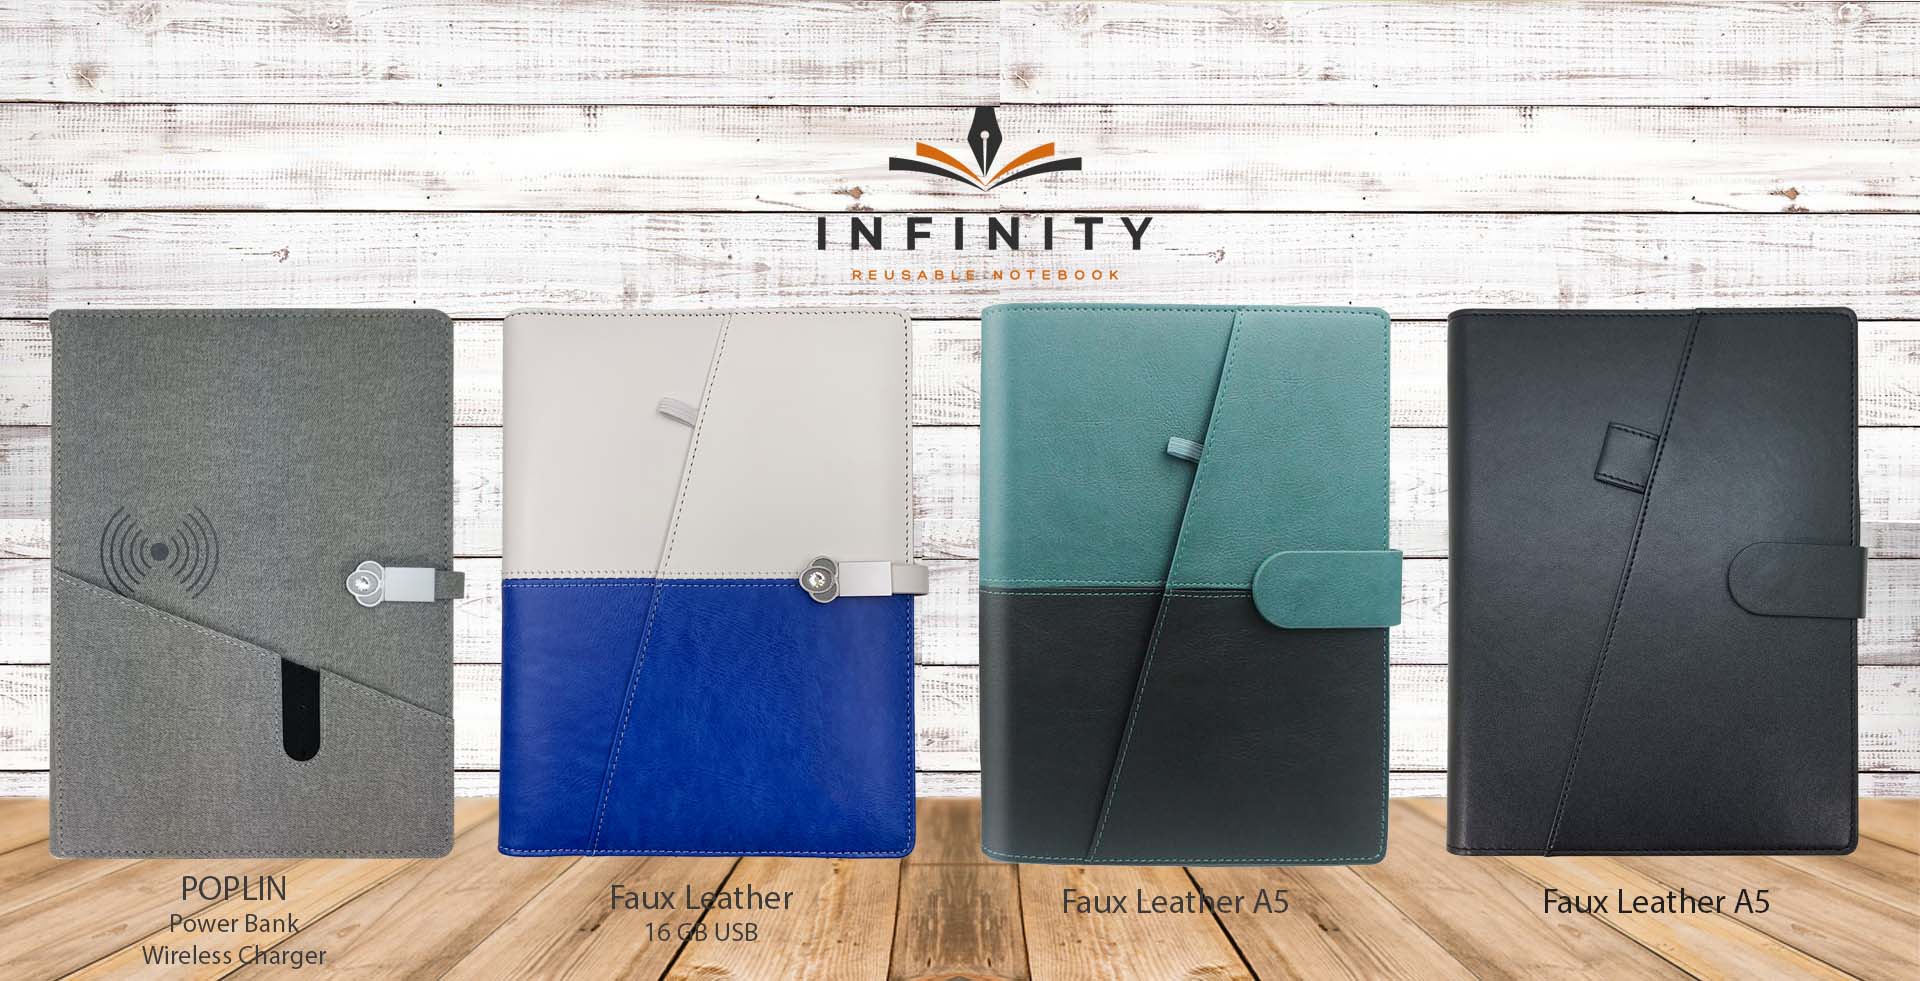 New Infinity Smart Notebook